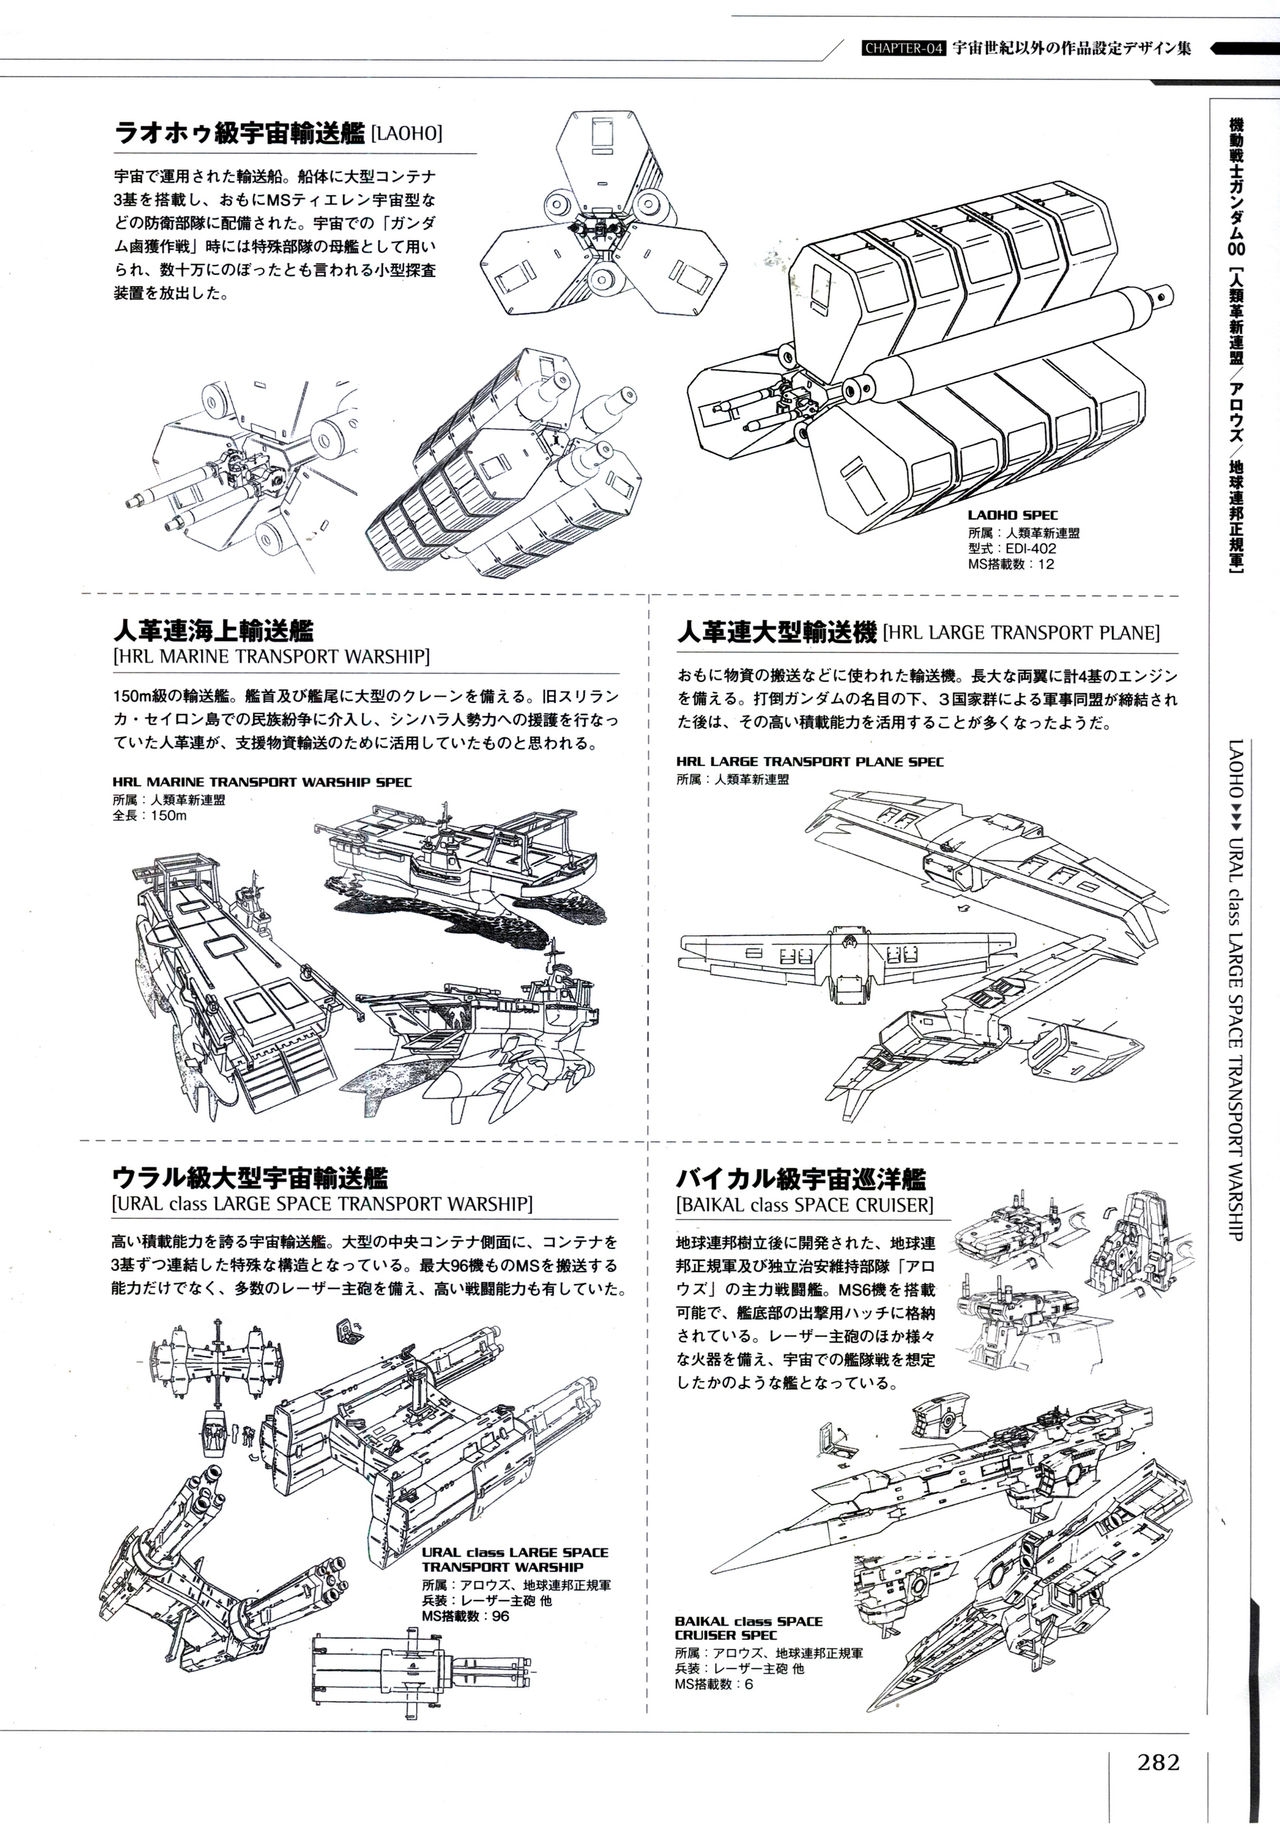 Mobile Suit Gundam - Ship & Aerospace Plane Encyclopedia - Revised Edition 287